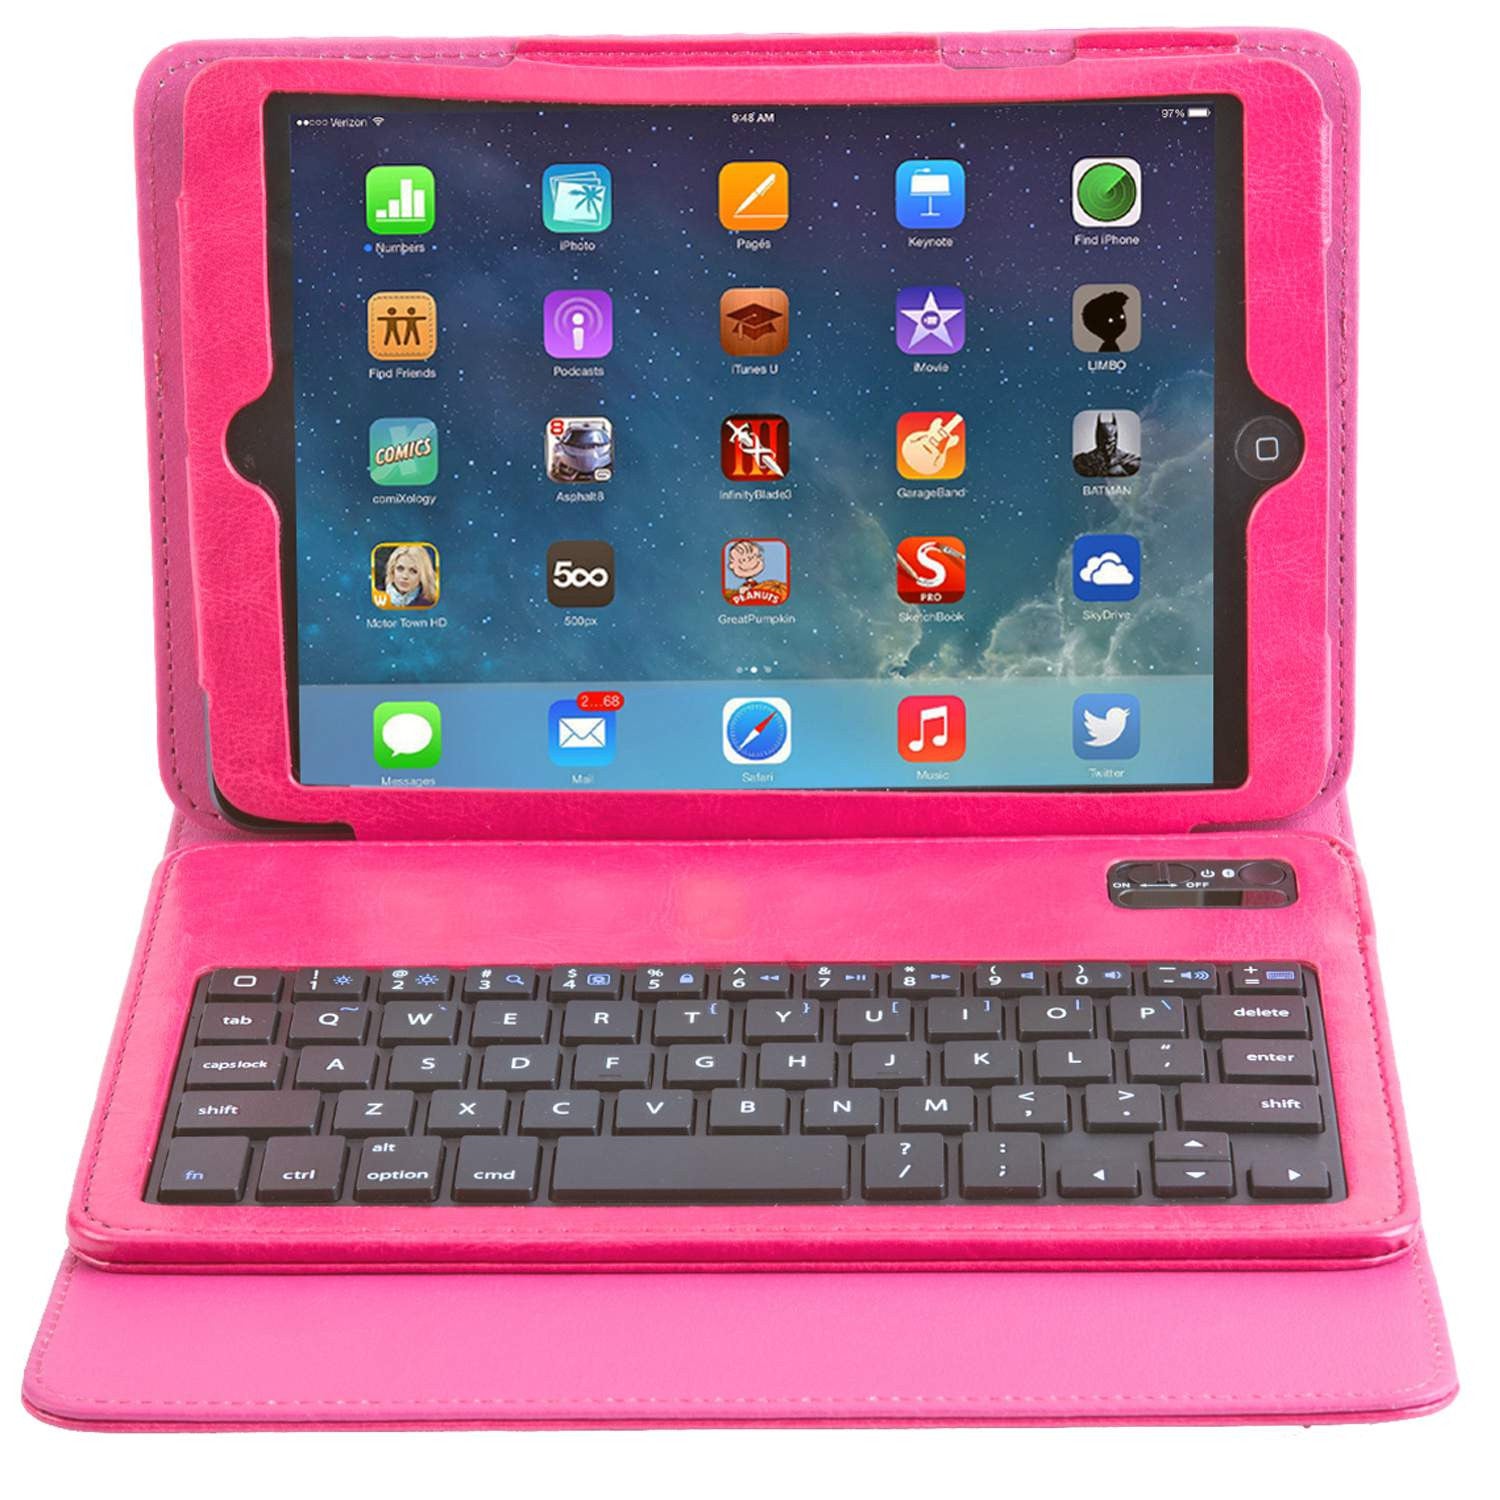 Vegan Leather Folio Case with Bluetooth? Keyboard for iPad Mini 1, 2, 3 & 4 (KX101)